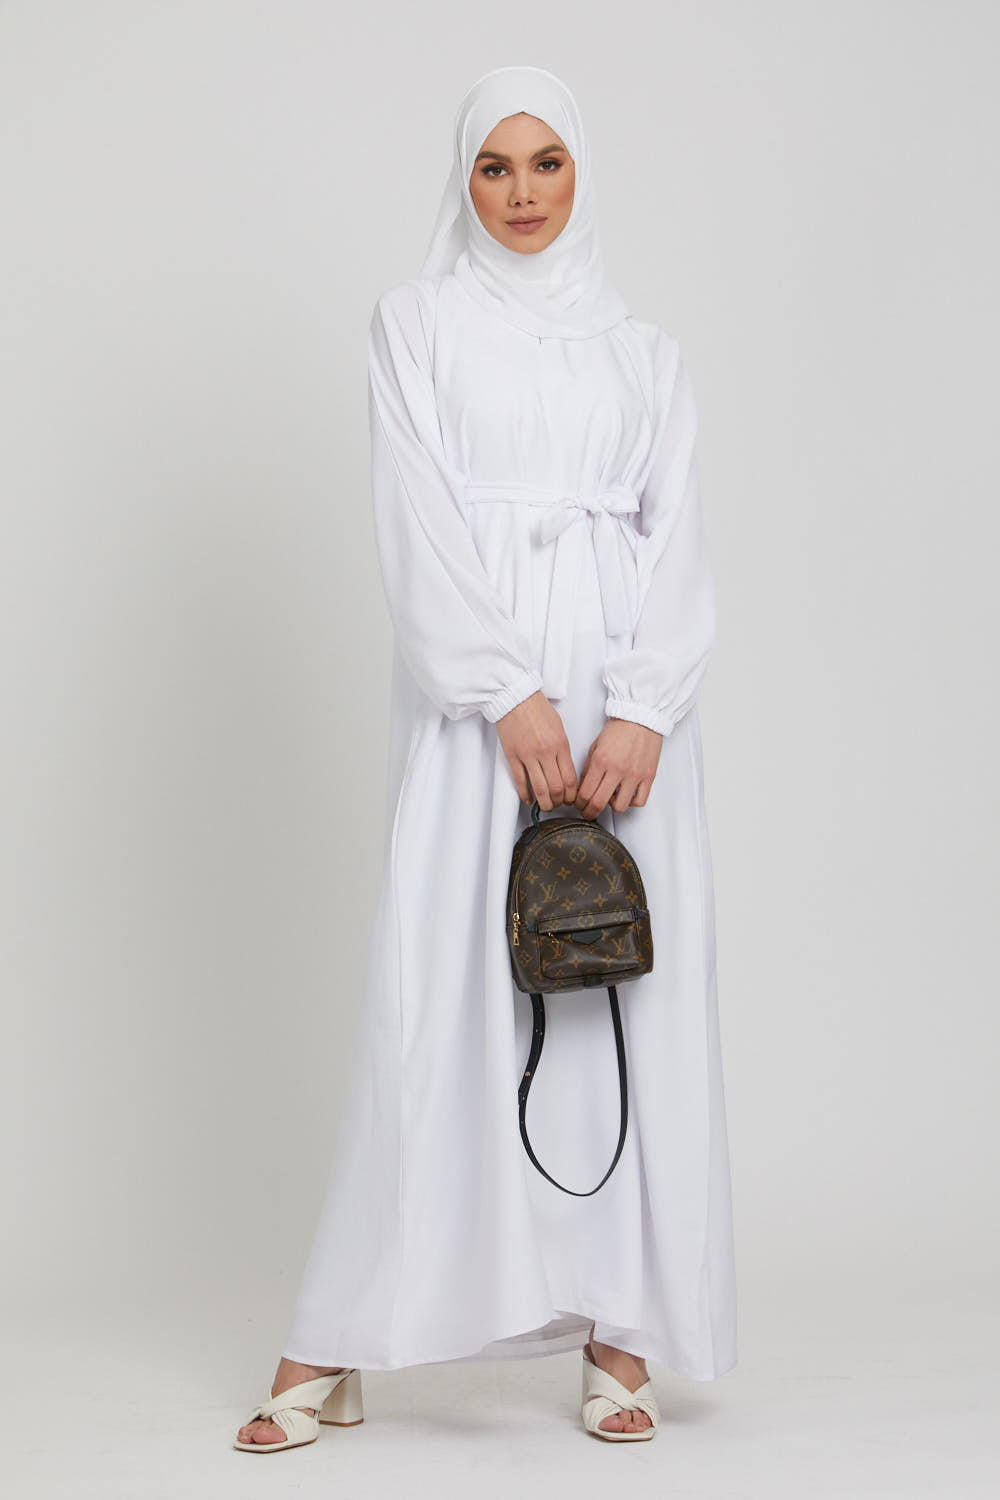 Plain Abaya with Elasticated Cuffs - White